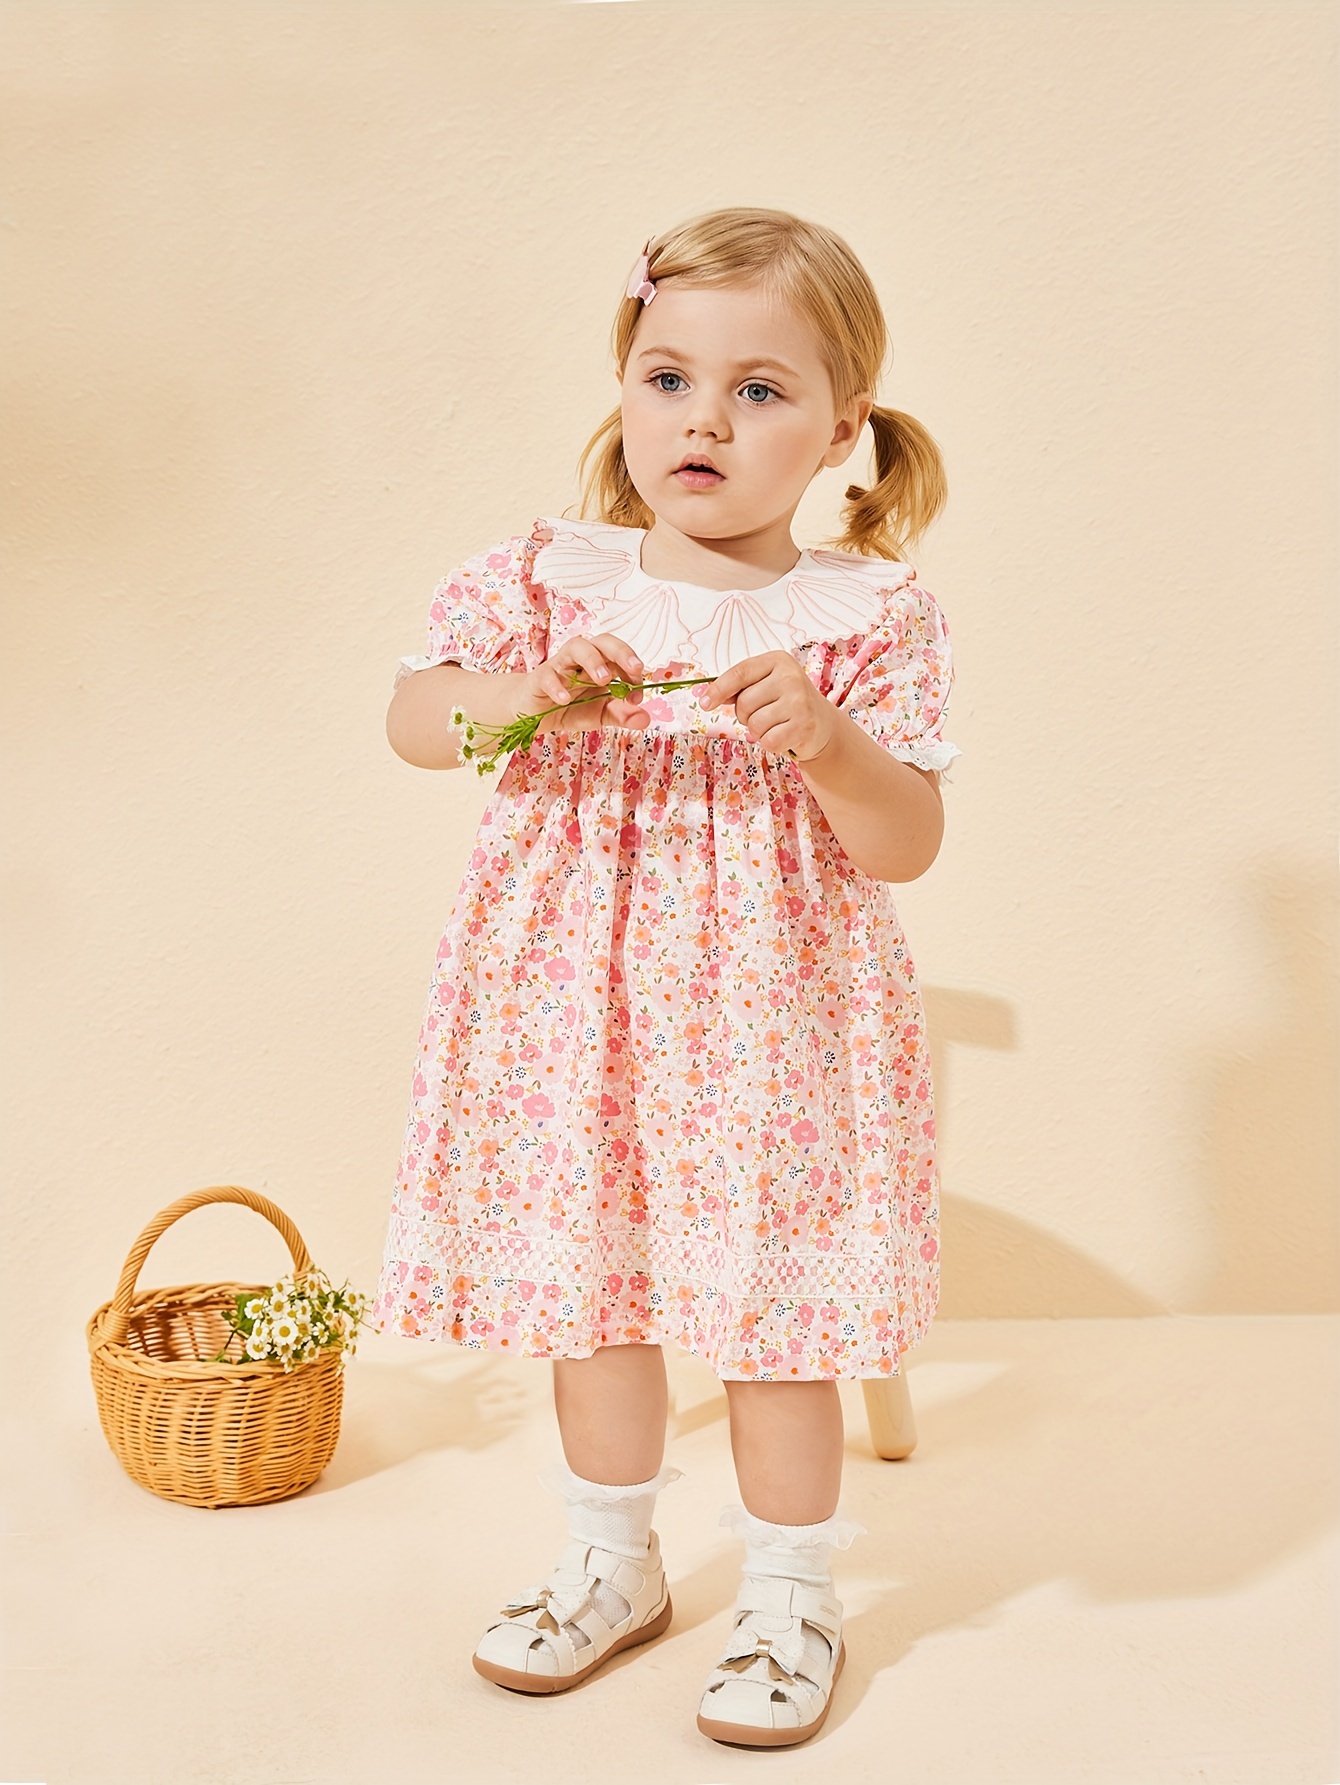 Princess Cotton Pastoral Suit For Girls Comfortable Toddler